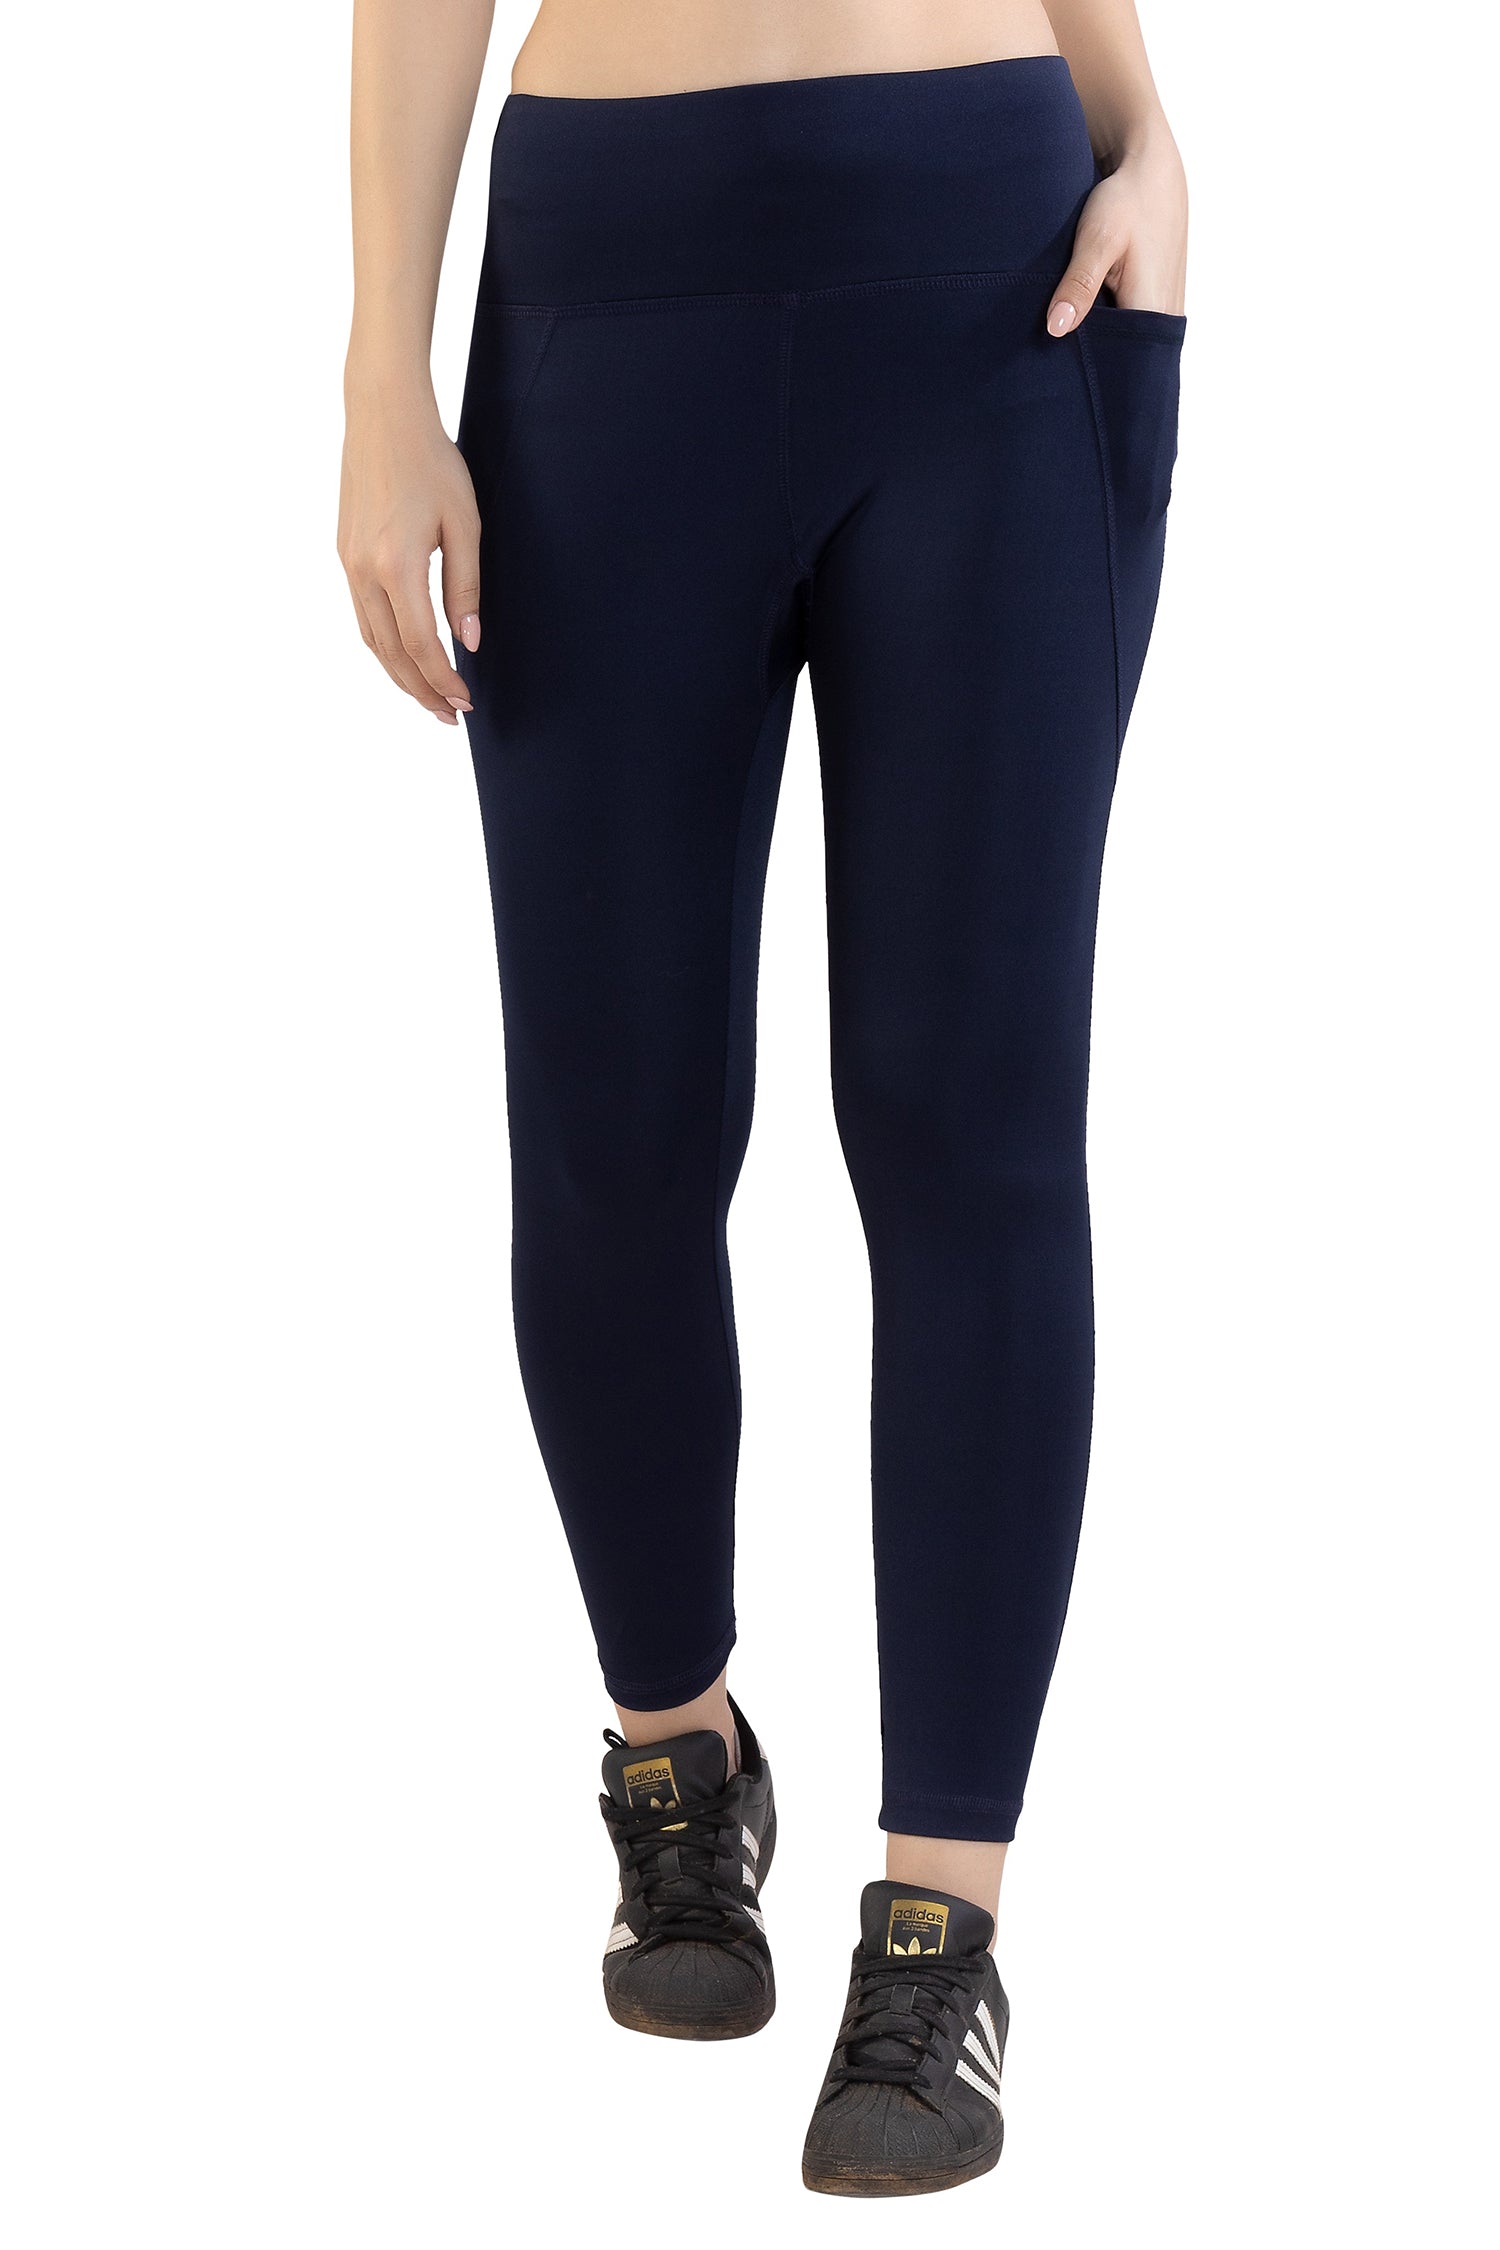 TRASA Active High Waist Printed Yoga Pants for Women's - Blue Camoufla –